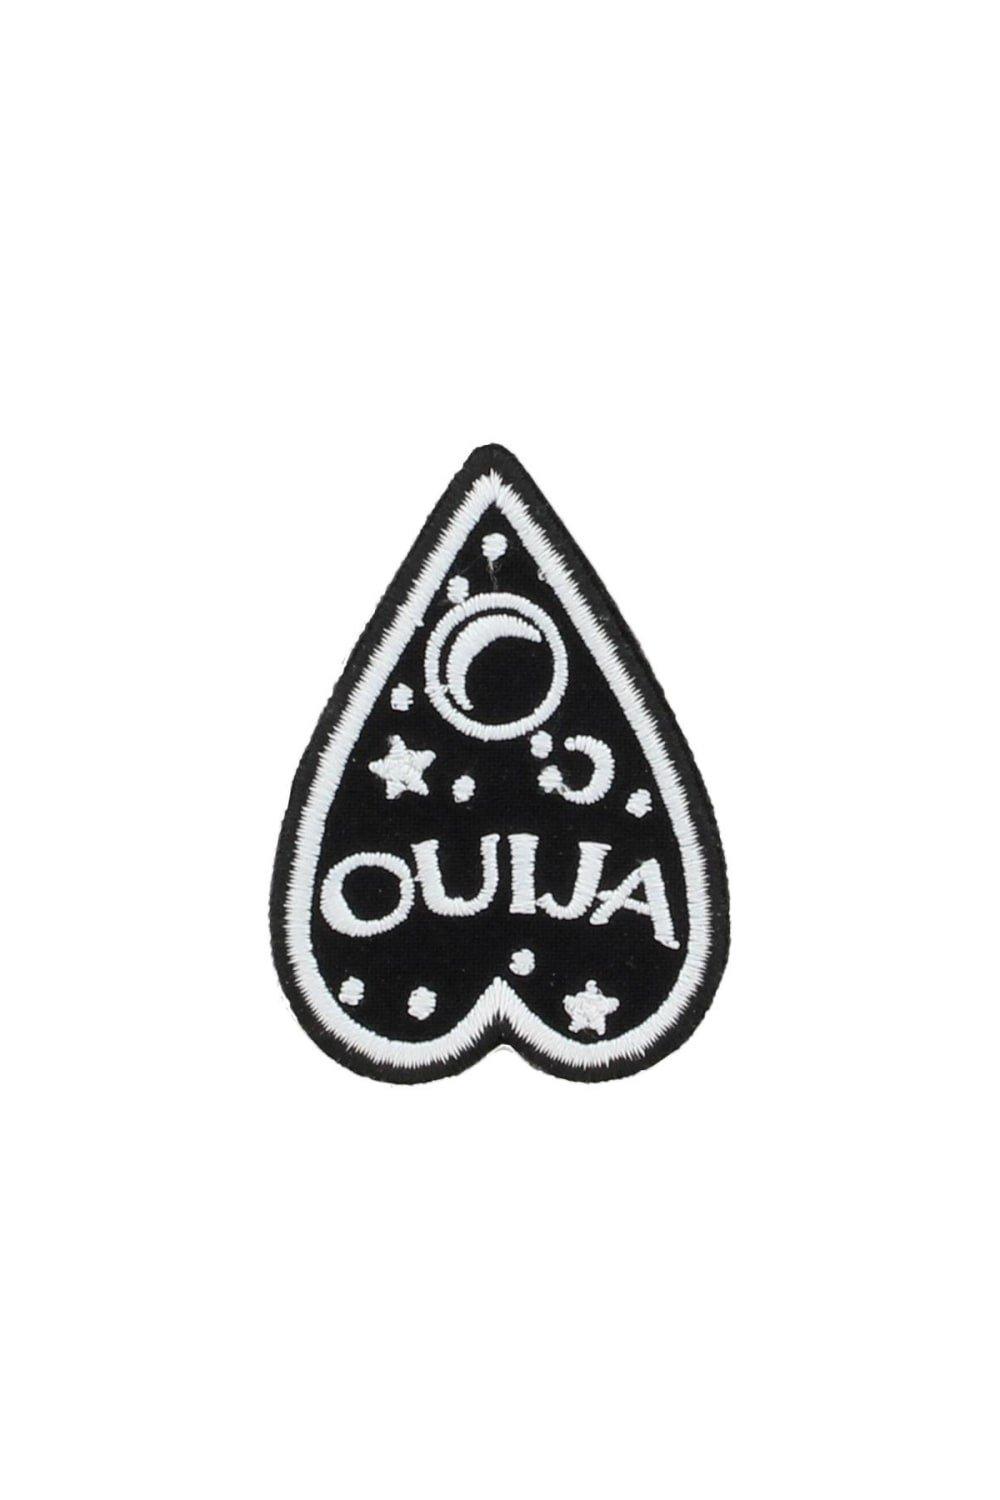 Ouija Planchette Iron On Patch